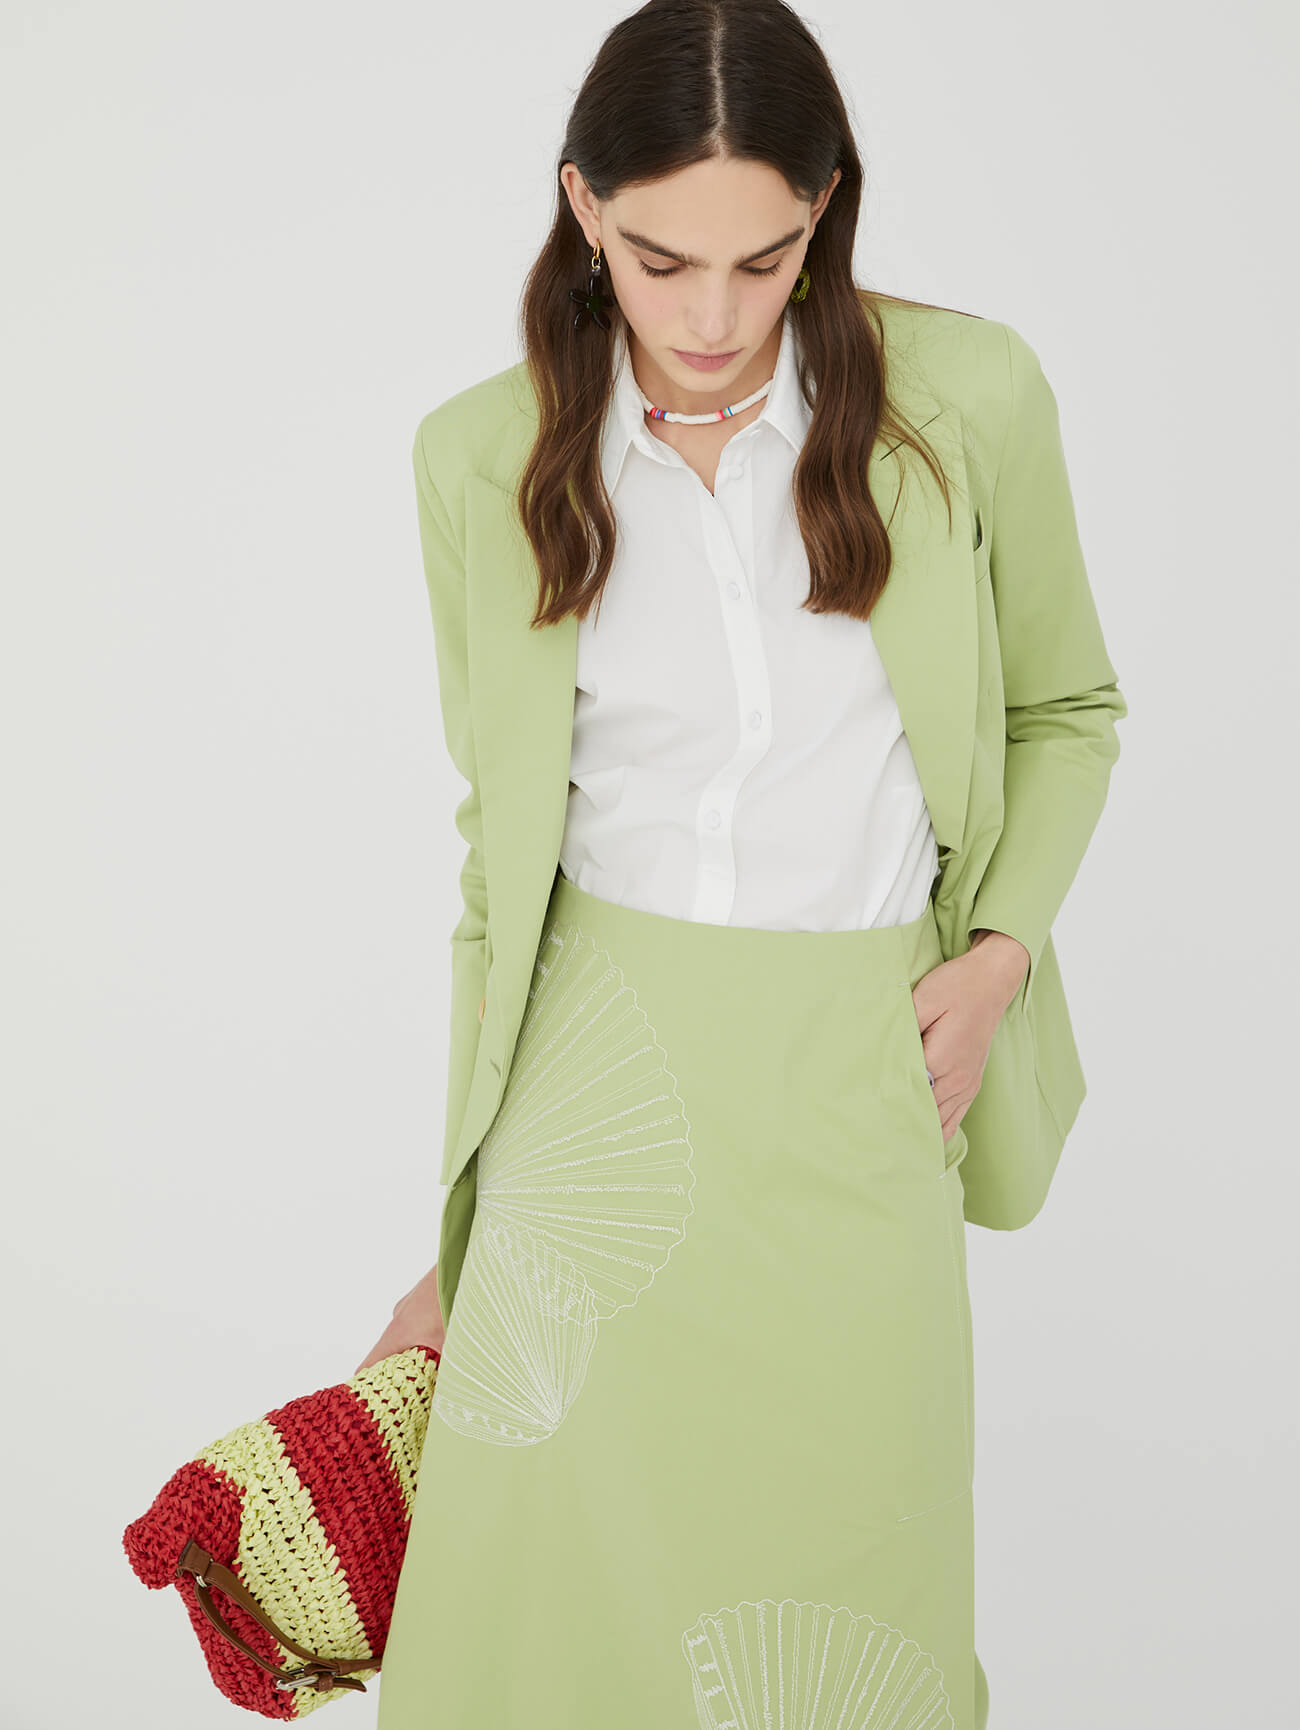 matcha midi skirt with embroidery